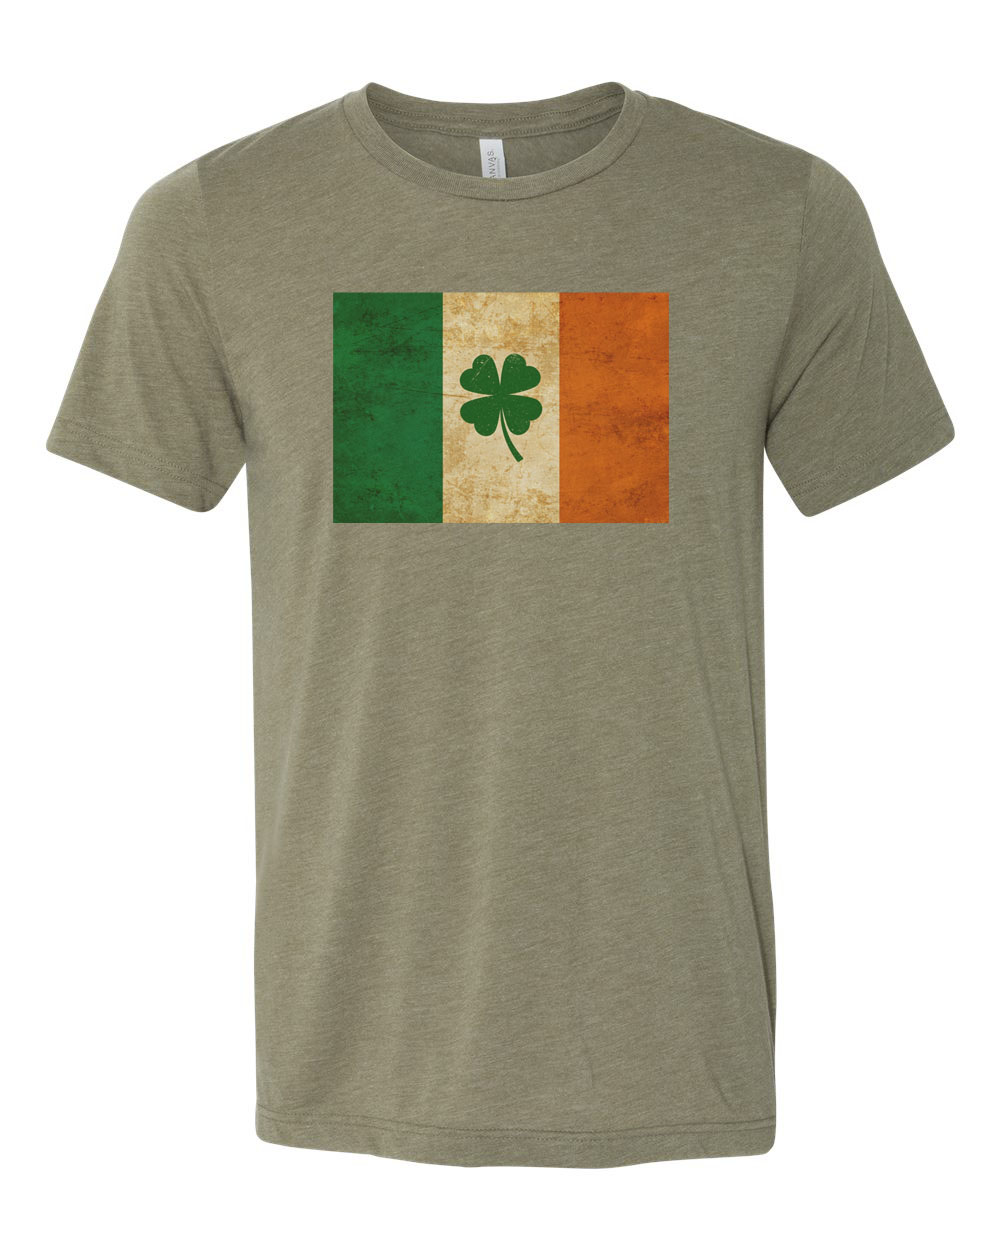 St. Patricks Day Shirt, Shamrock Shirt, Irish Flag, Ireland Shirt, Unisex Fit, Irish Shirt, Shamrock, Irish Flag Shirt, St Patty's Shirt, Heather Olive, SMALL - image 1 of 1